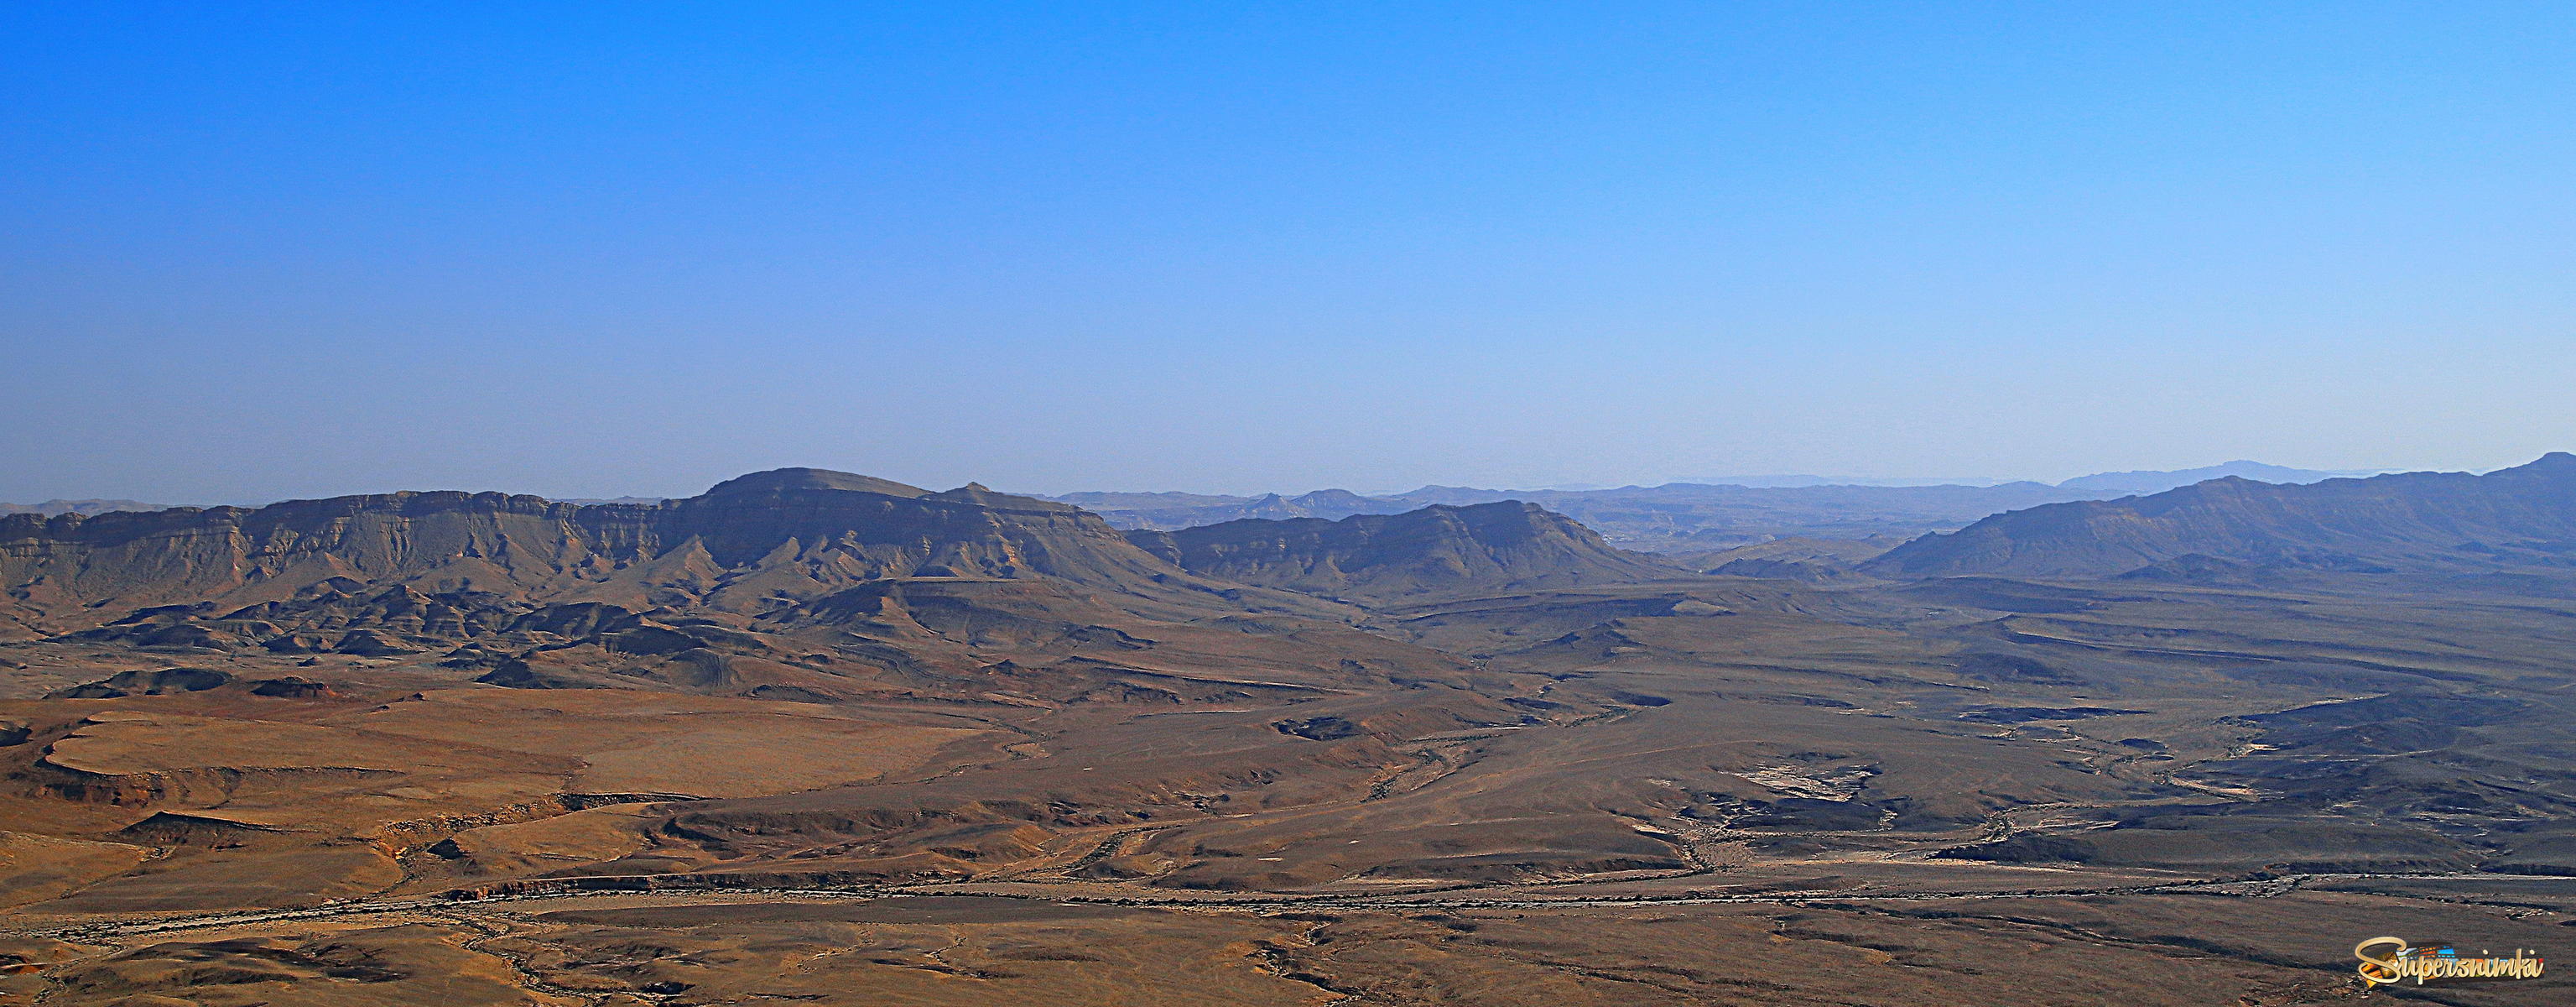 Пустыня Негев.Эйн-Авдат..